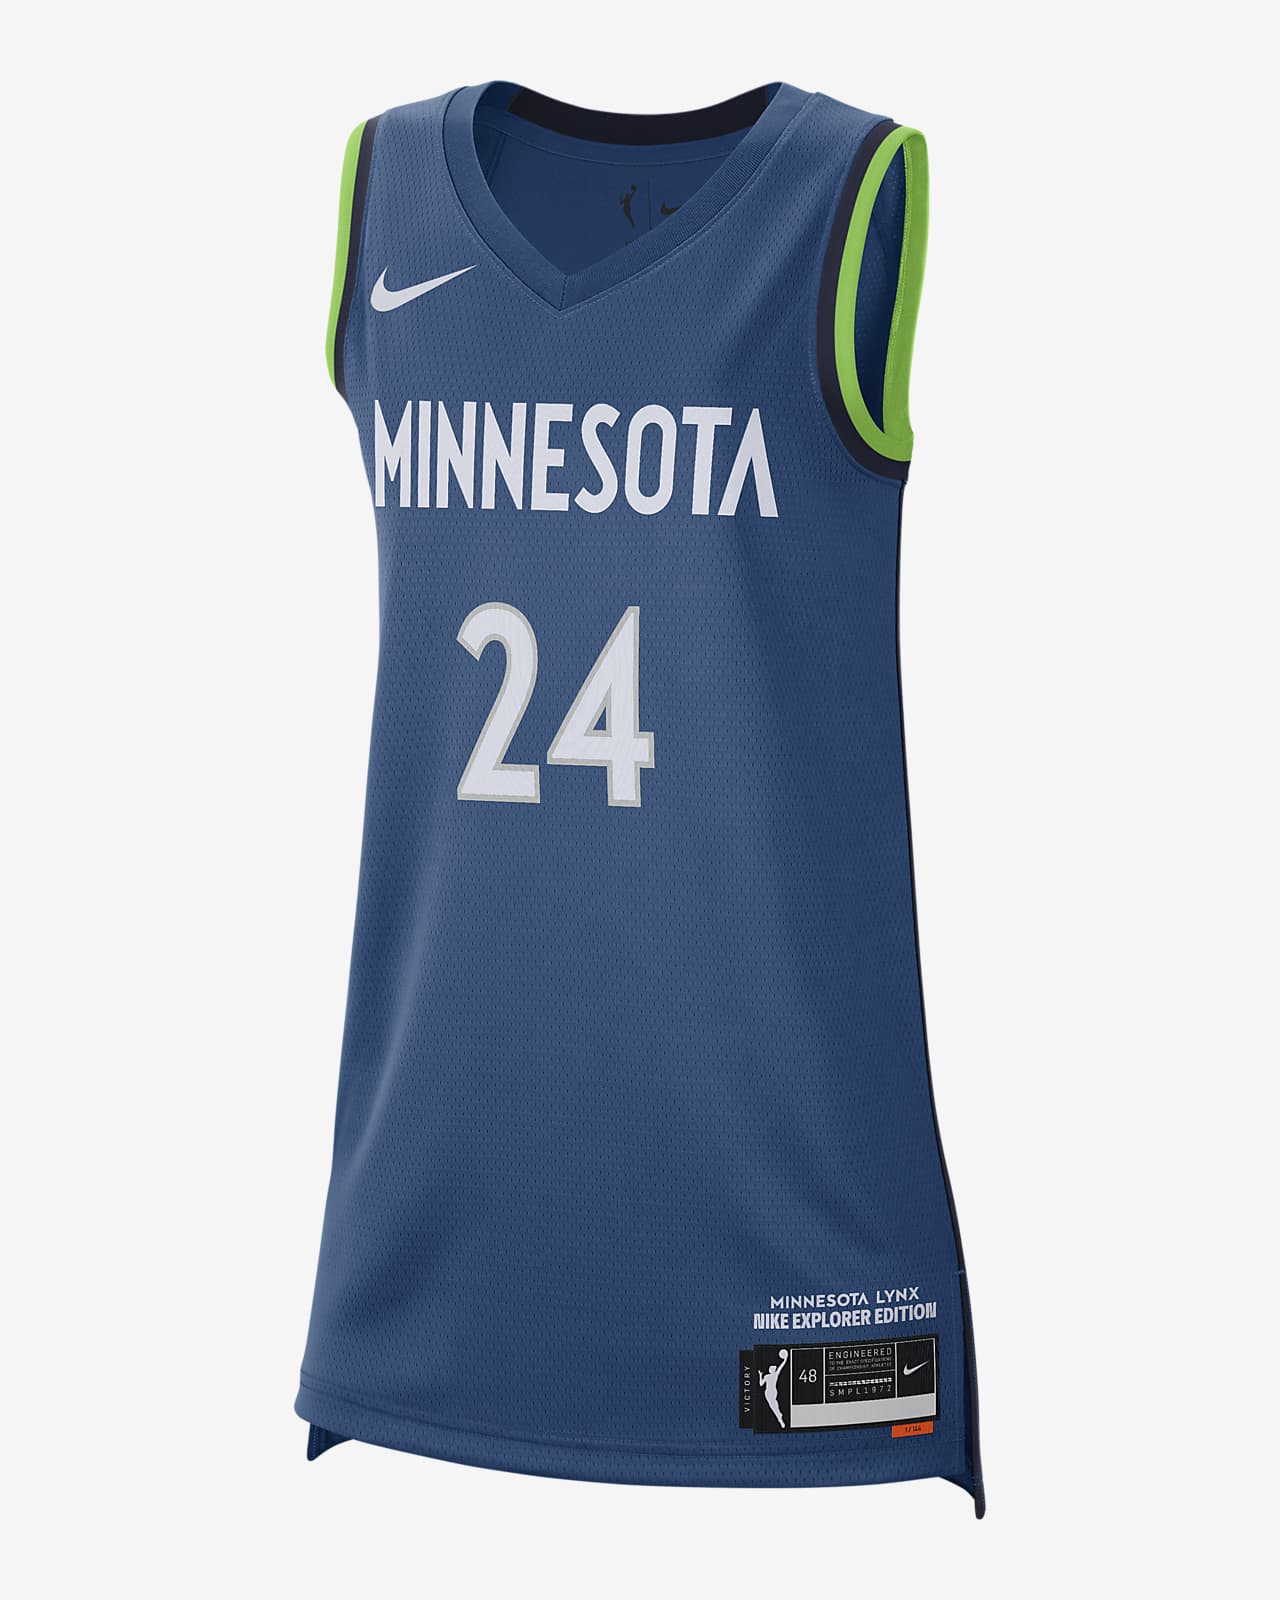 Camiseta Nike Dri-FIT WNBA Victory para mujer Minnesota Lynx Explorer Edition